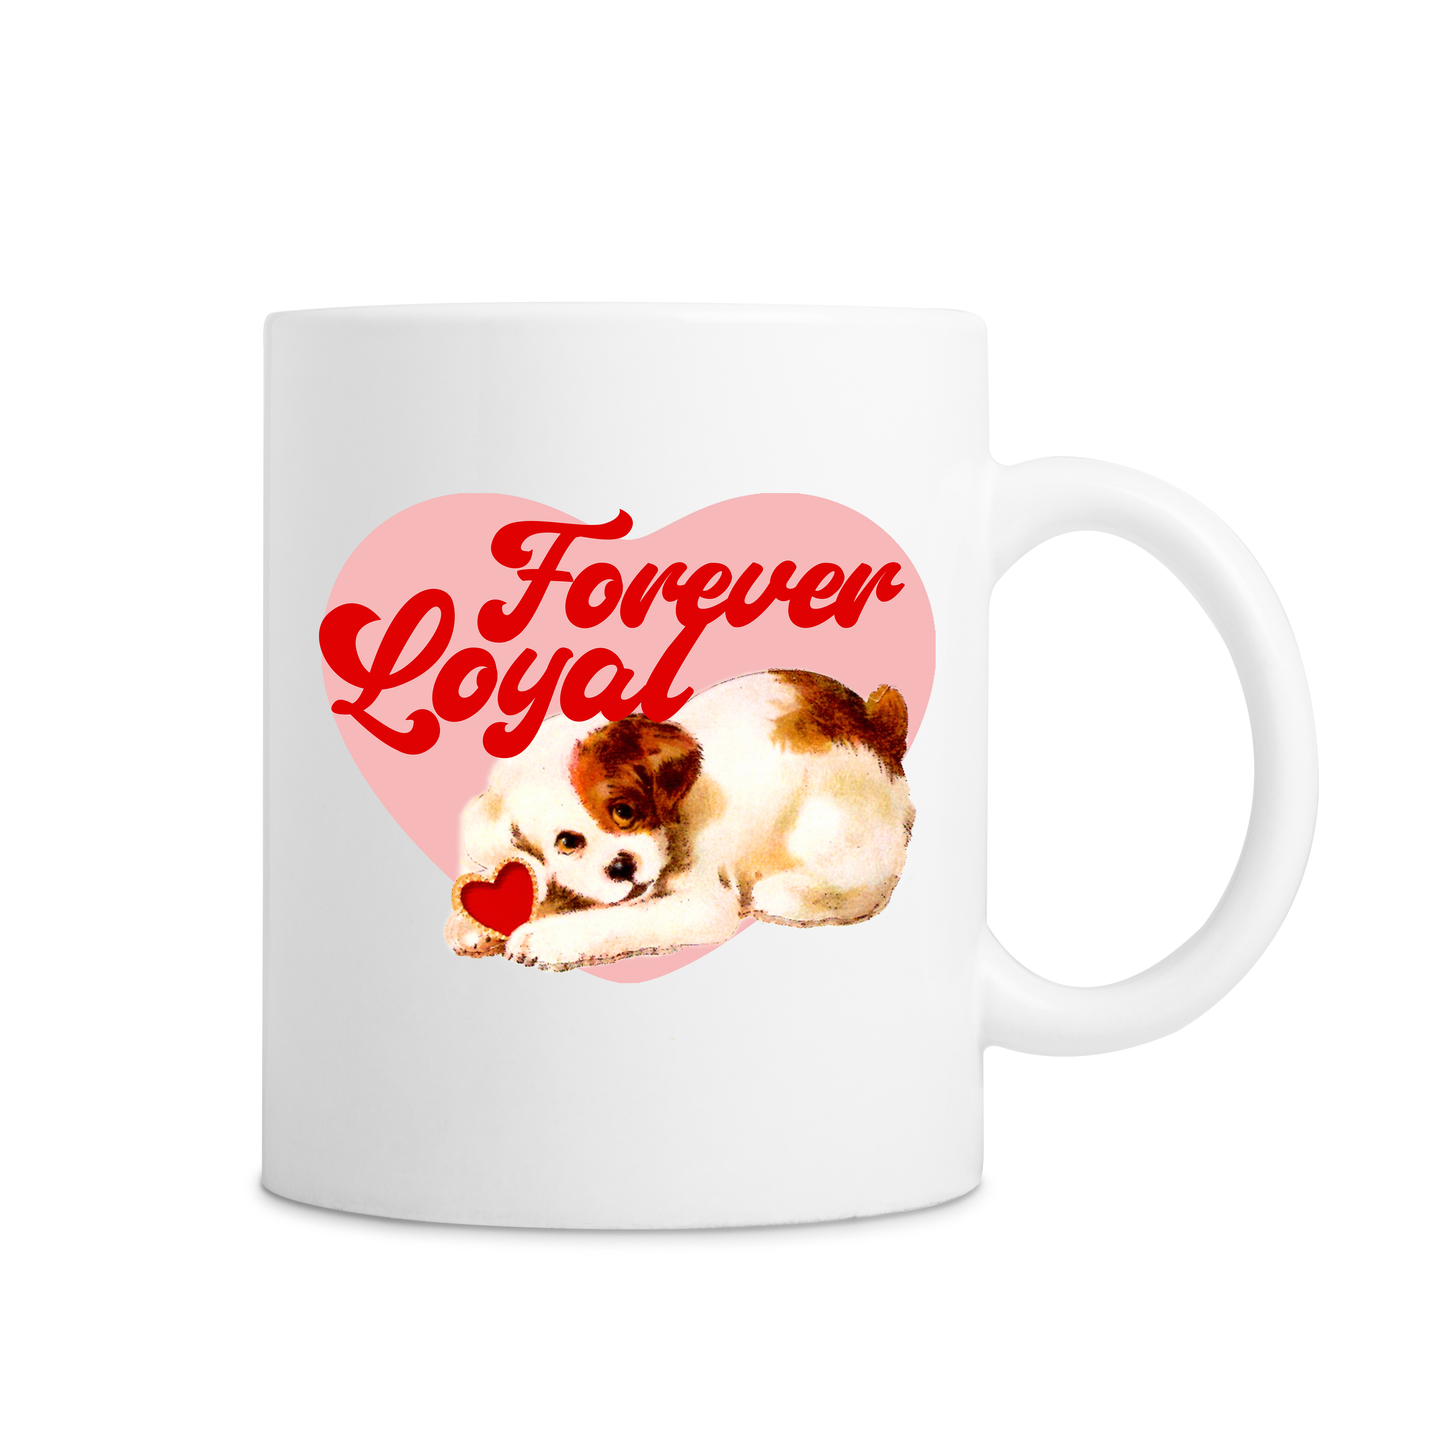 Forever Loyal Mug - White